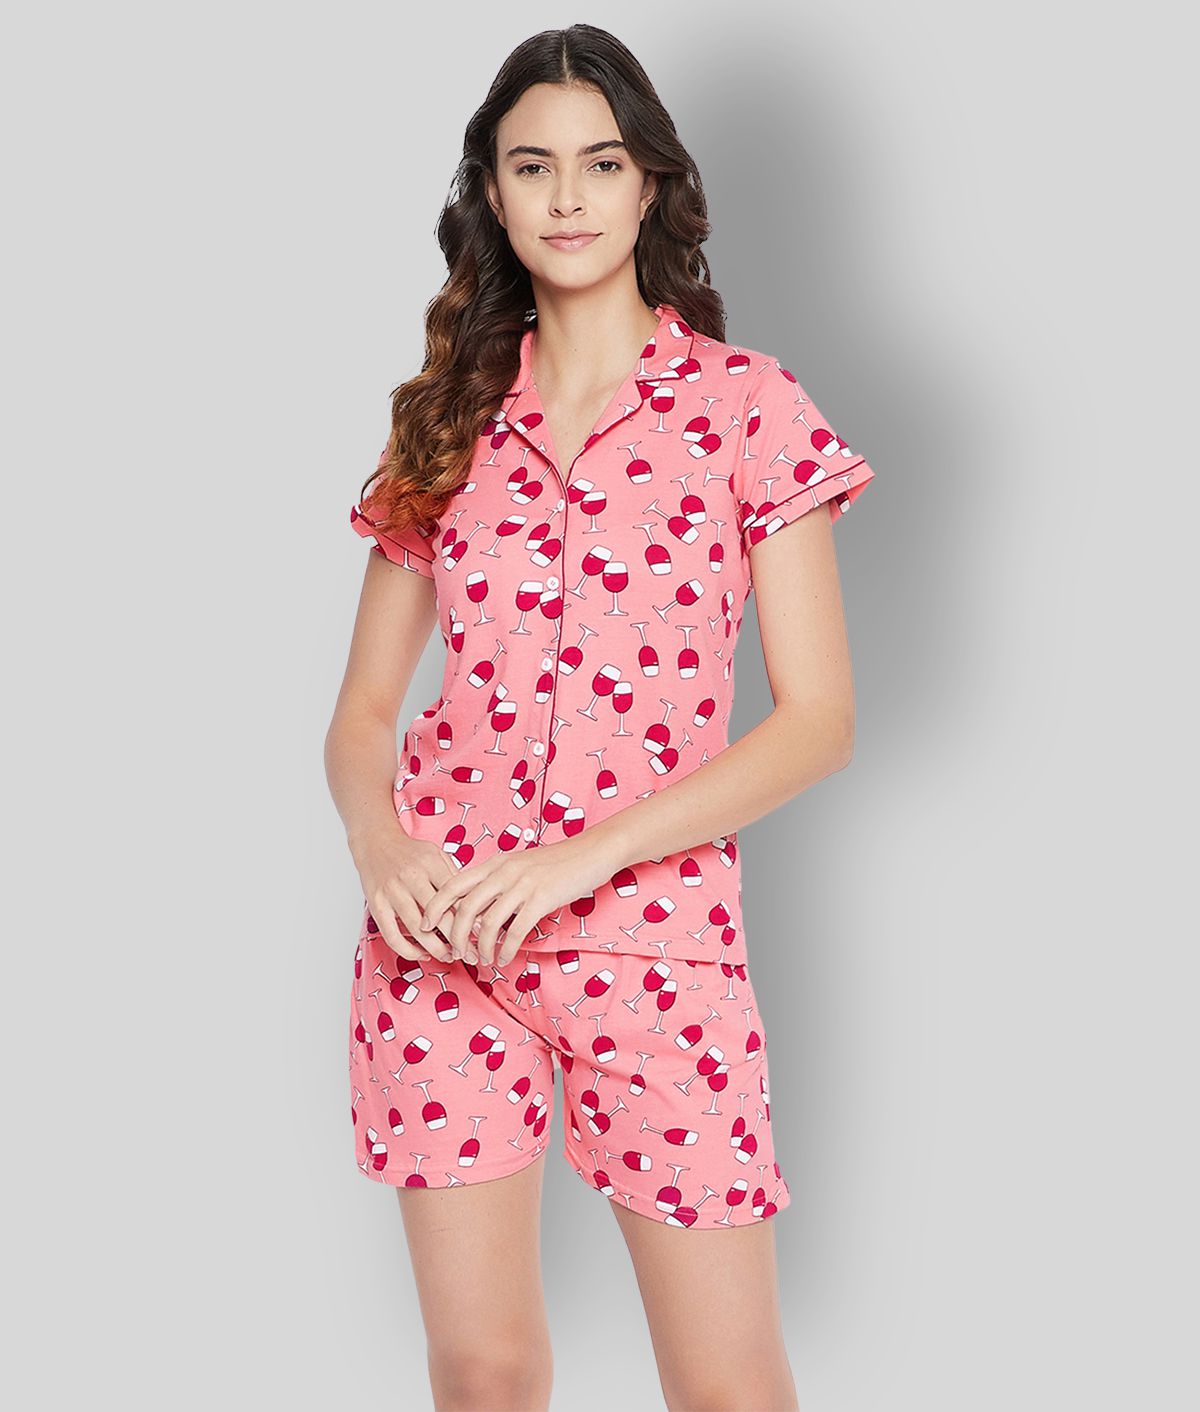     			Clovia - Pink Cotton Women's Nightwear Nightsuit Sets ( Pack of 2 )